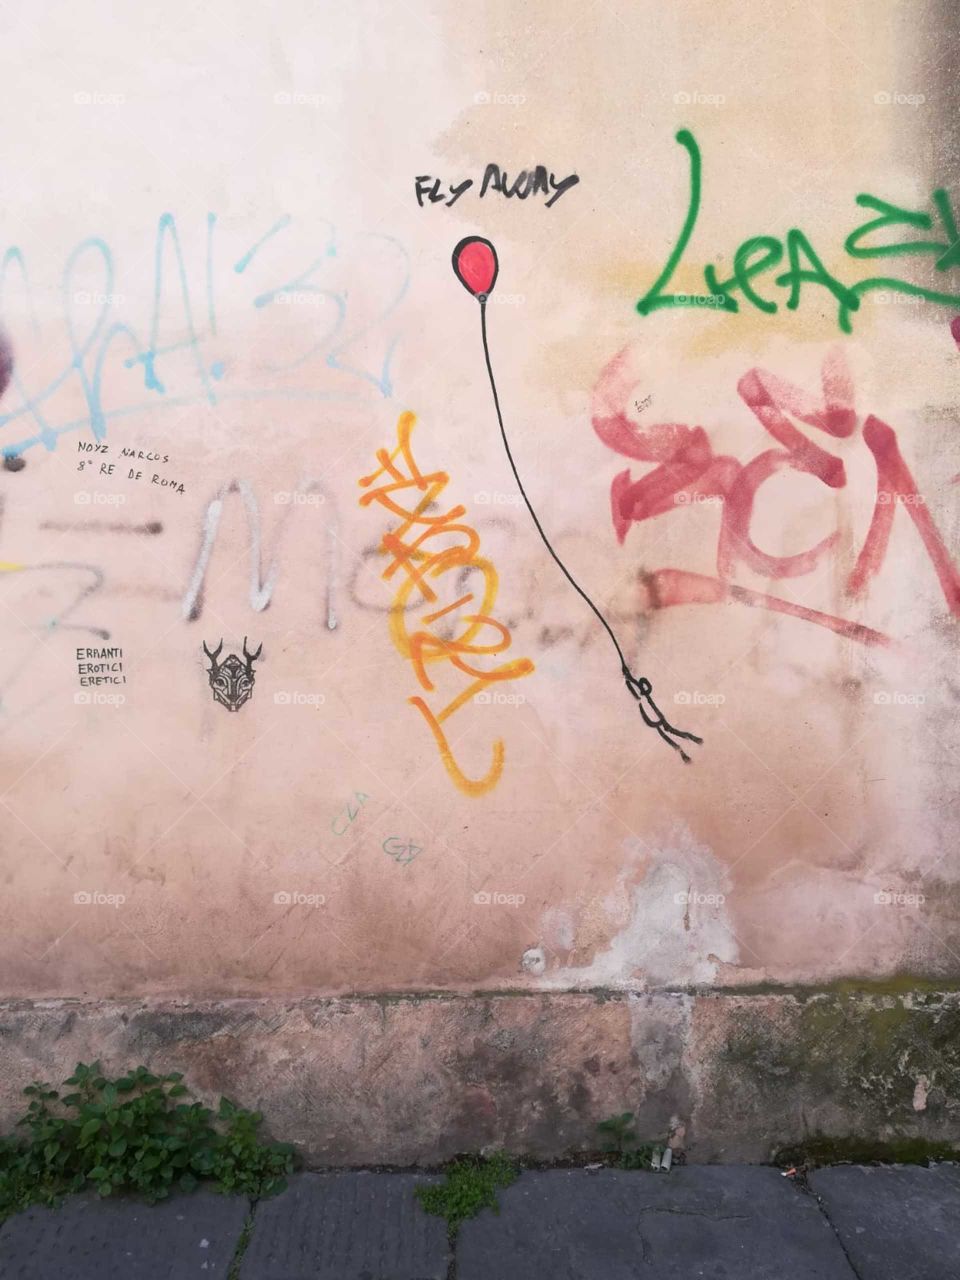 Pisa graffiti